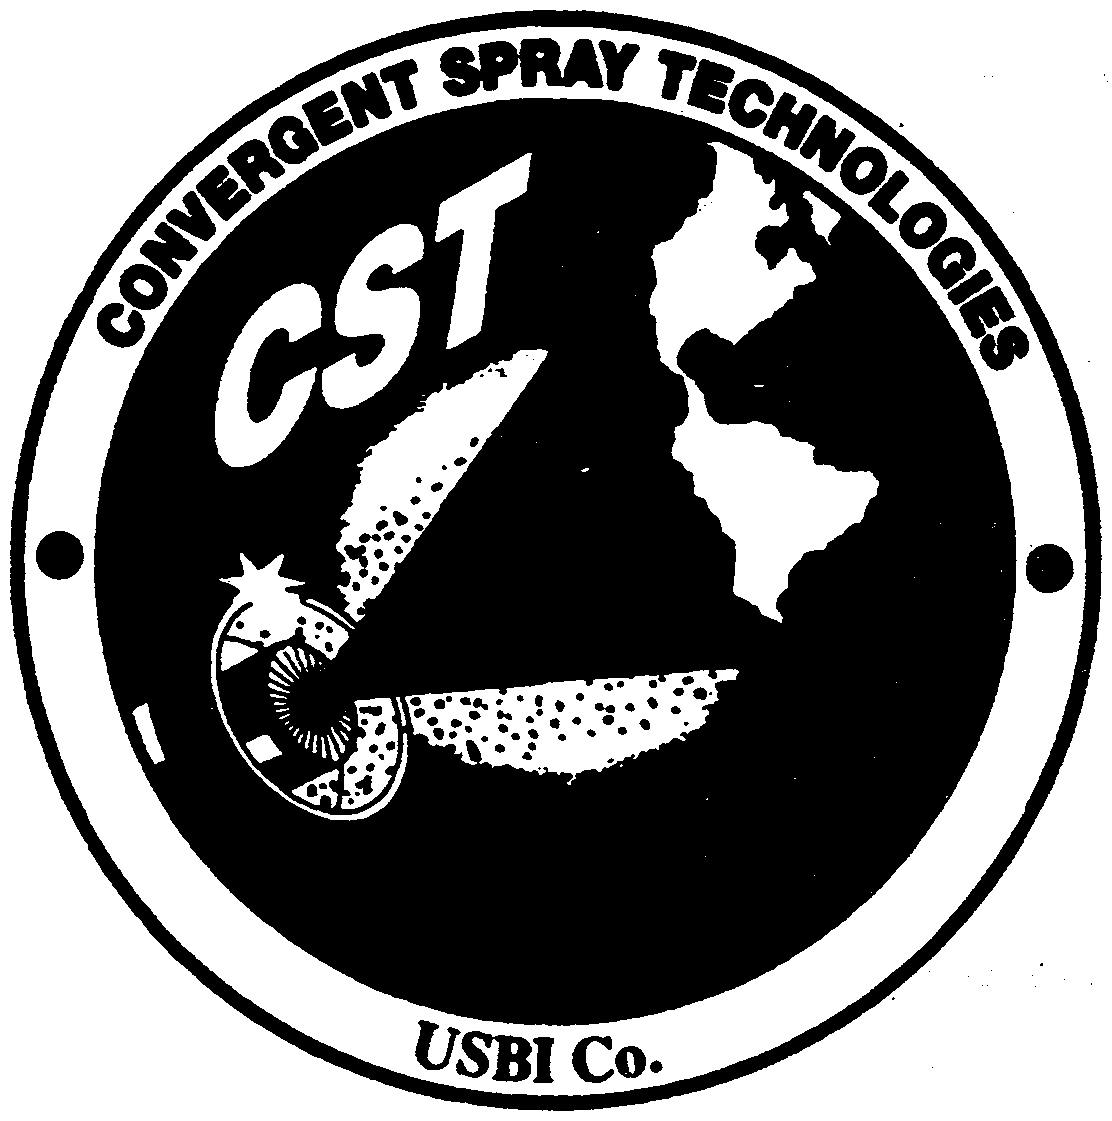  CST CONVERGENT SPRAY TECHNOLOGIES USBI CO.